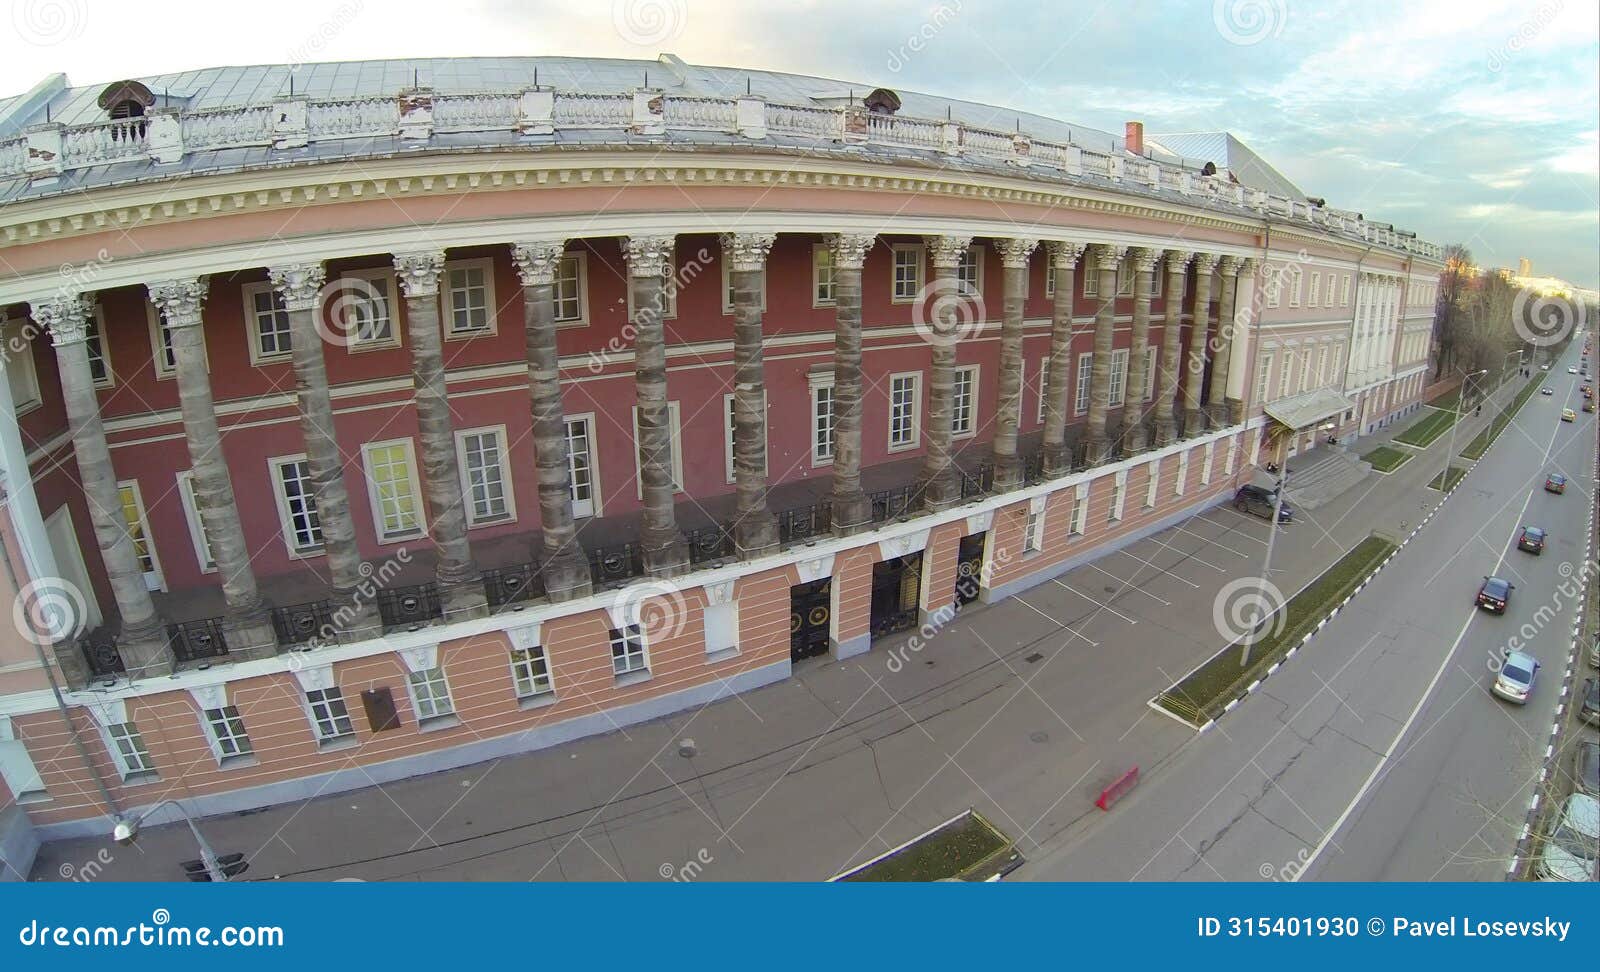 facade of catherine (golovinskiy) palace in